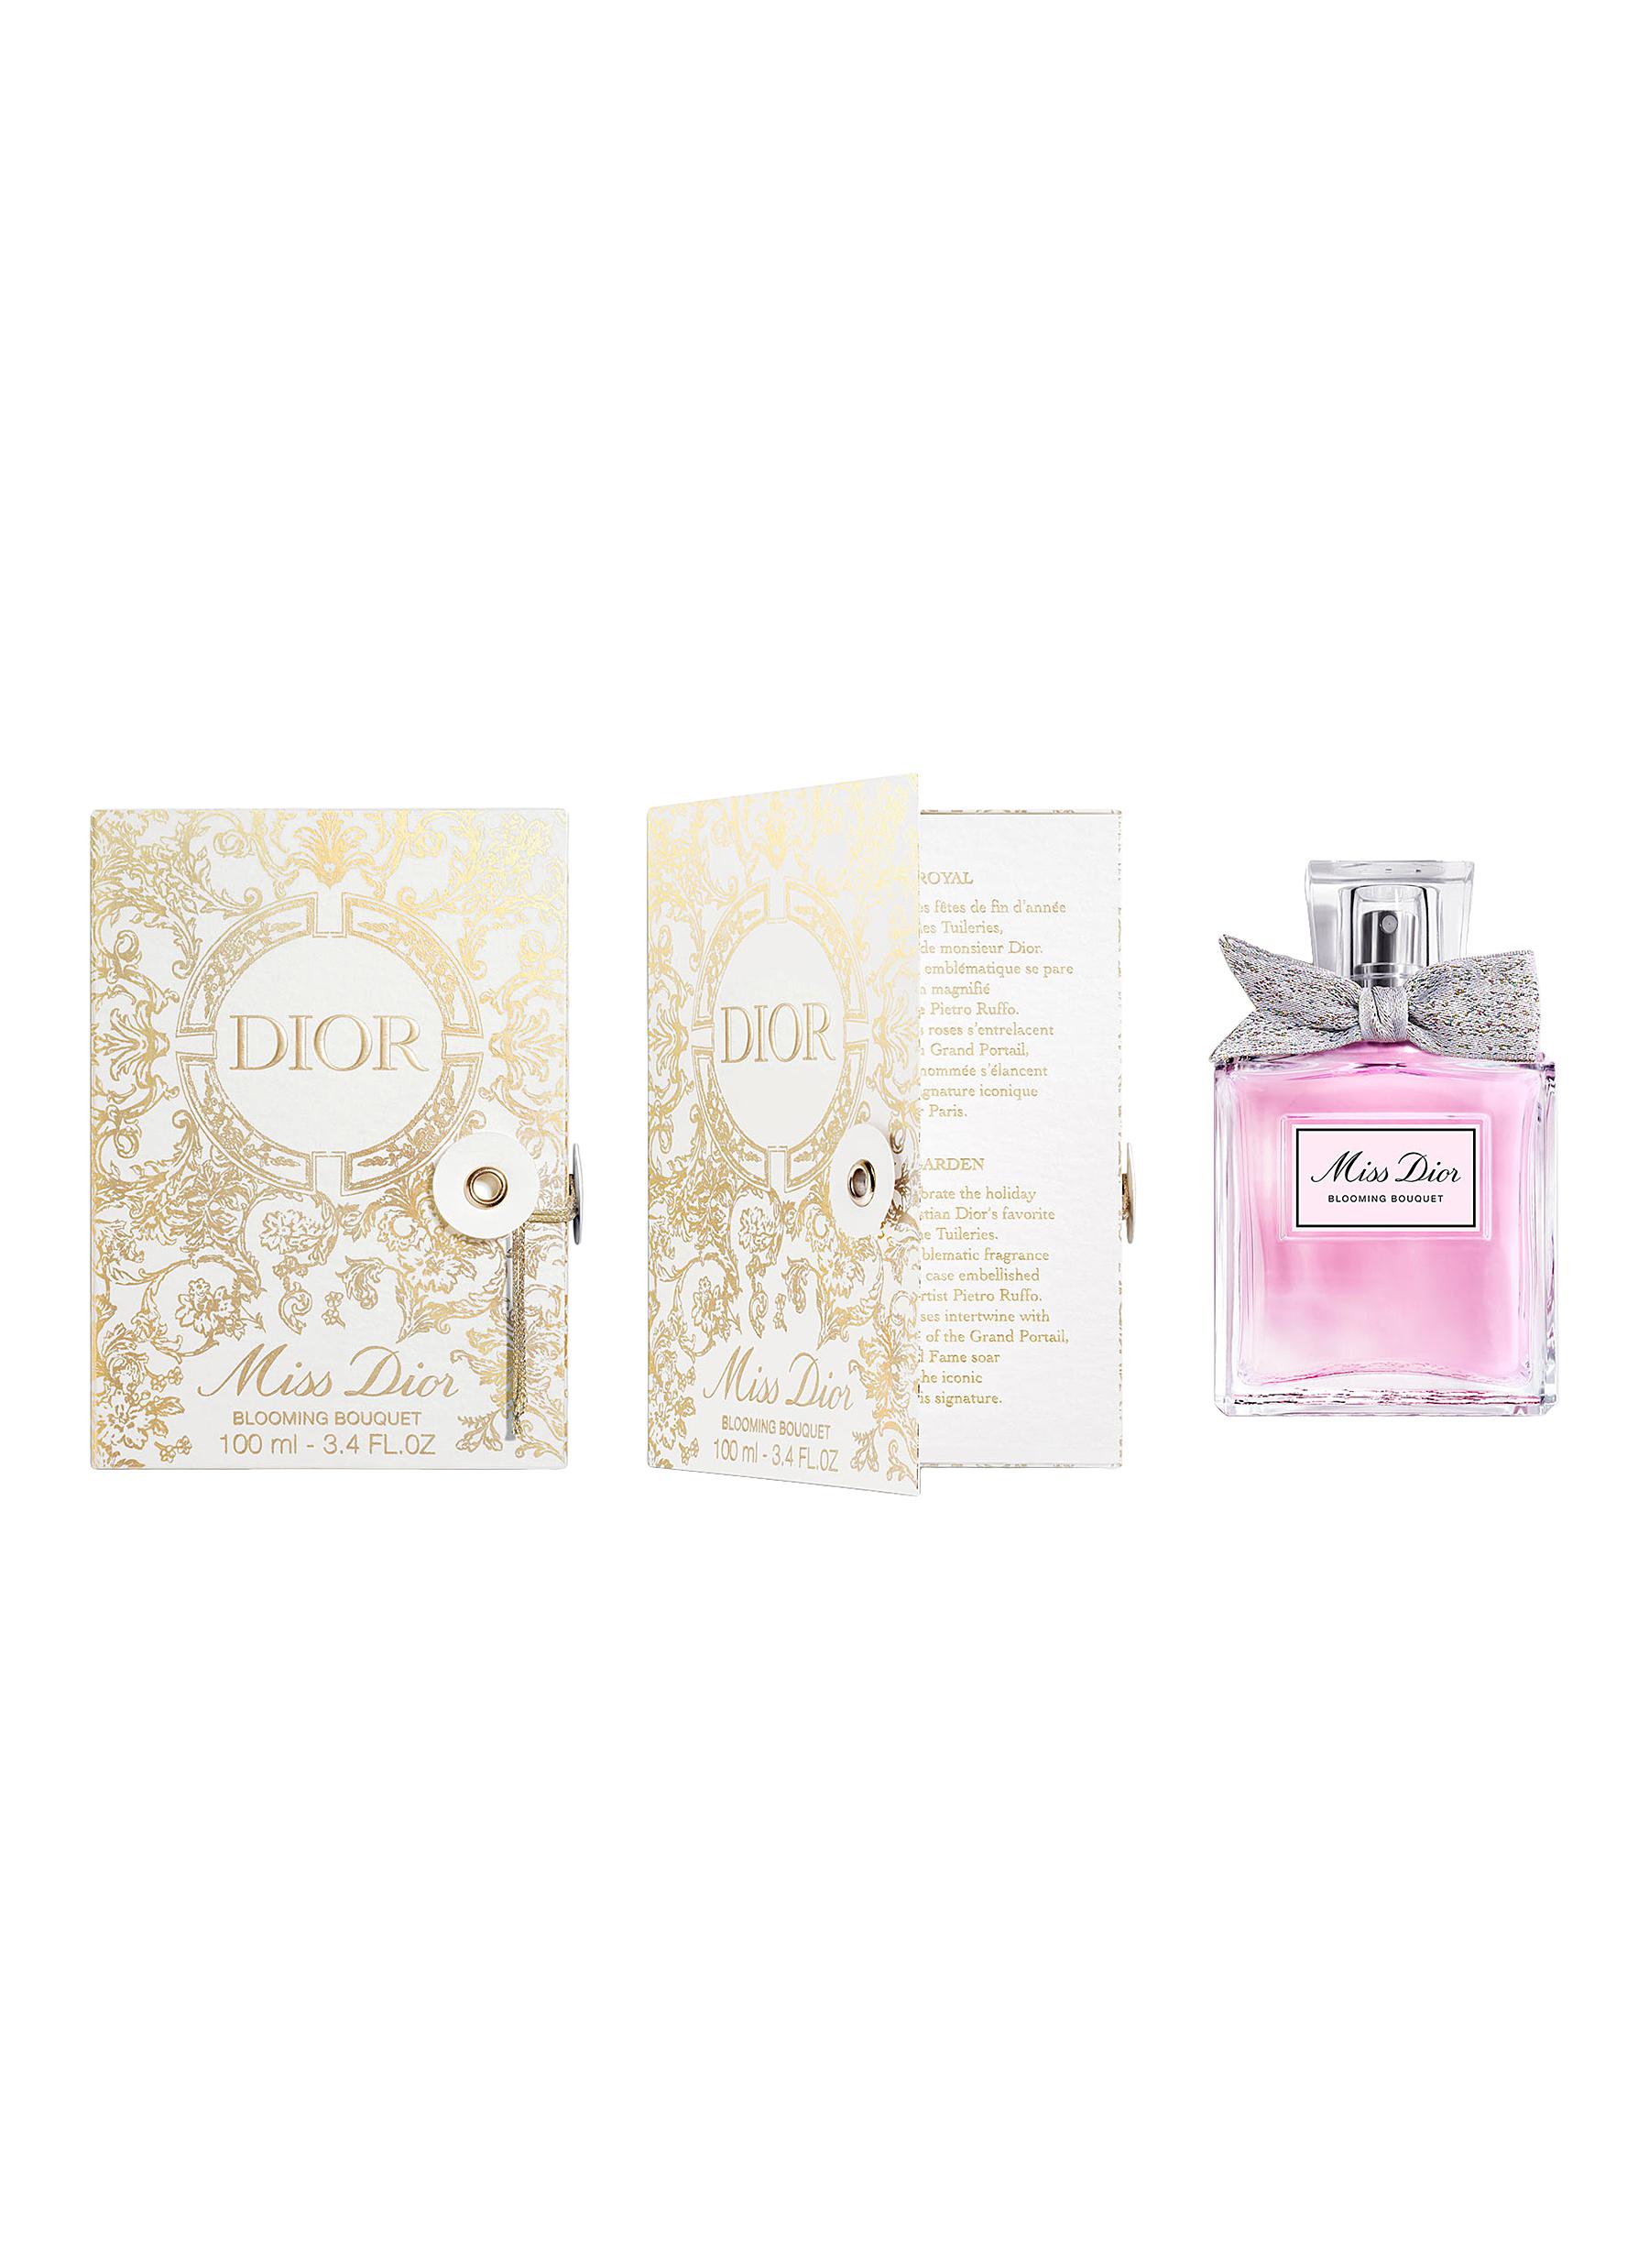 DIOR BEAUTY, Limited Edition Miss Dior Blooming Bouquet Eau de Toilette  100ml, Beauty